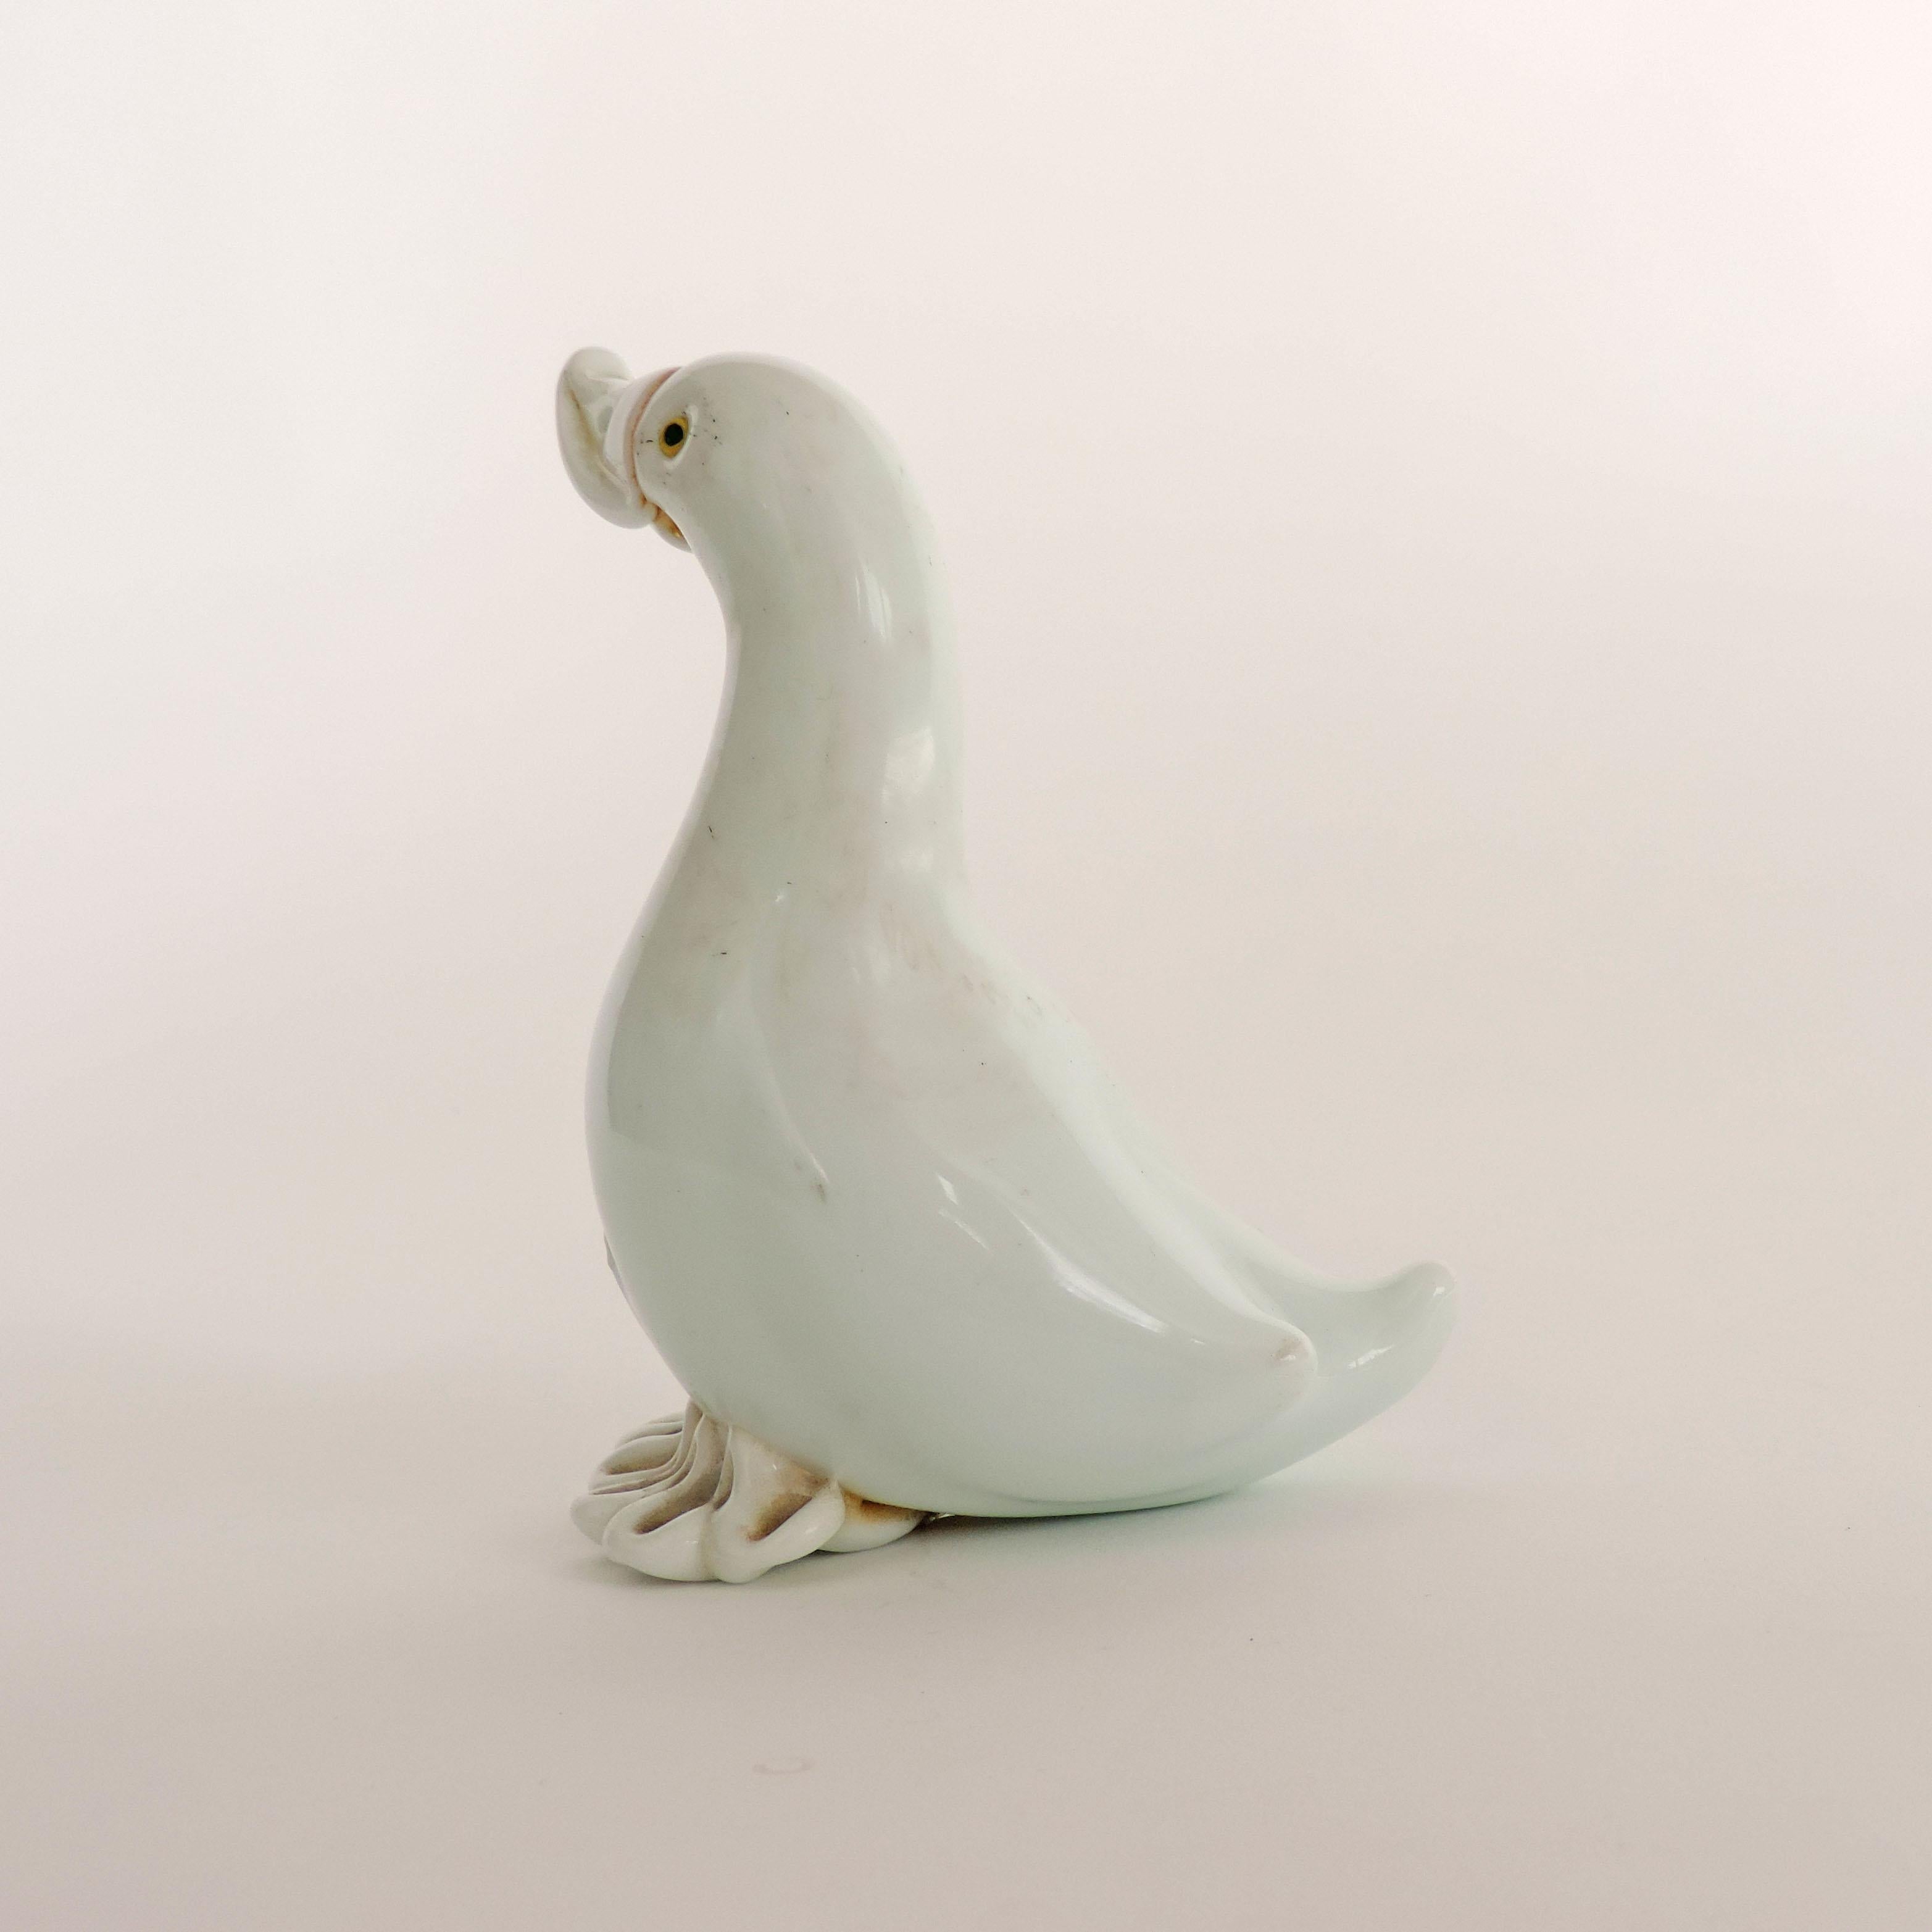 Murano glass duck attributed to Ercole Barovier, Italy, 1930s.